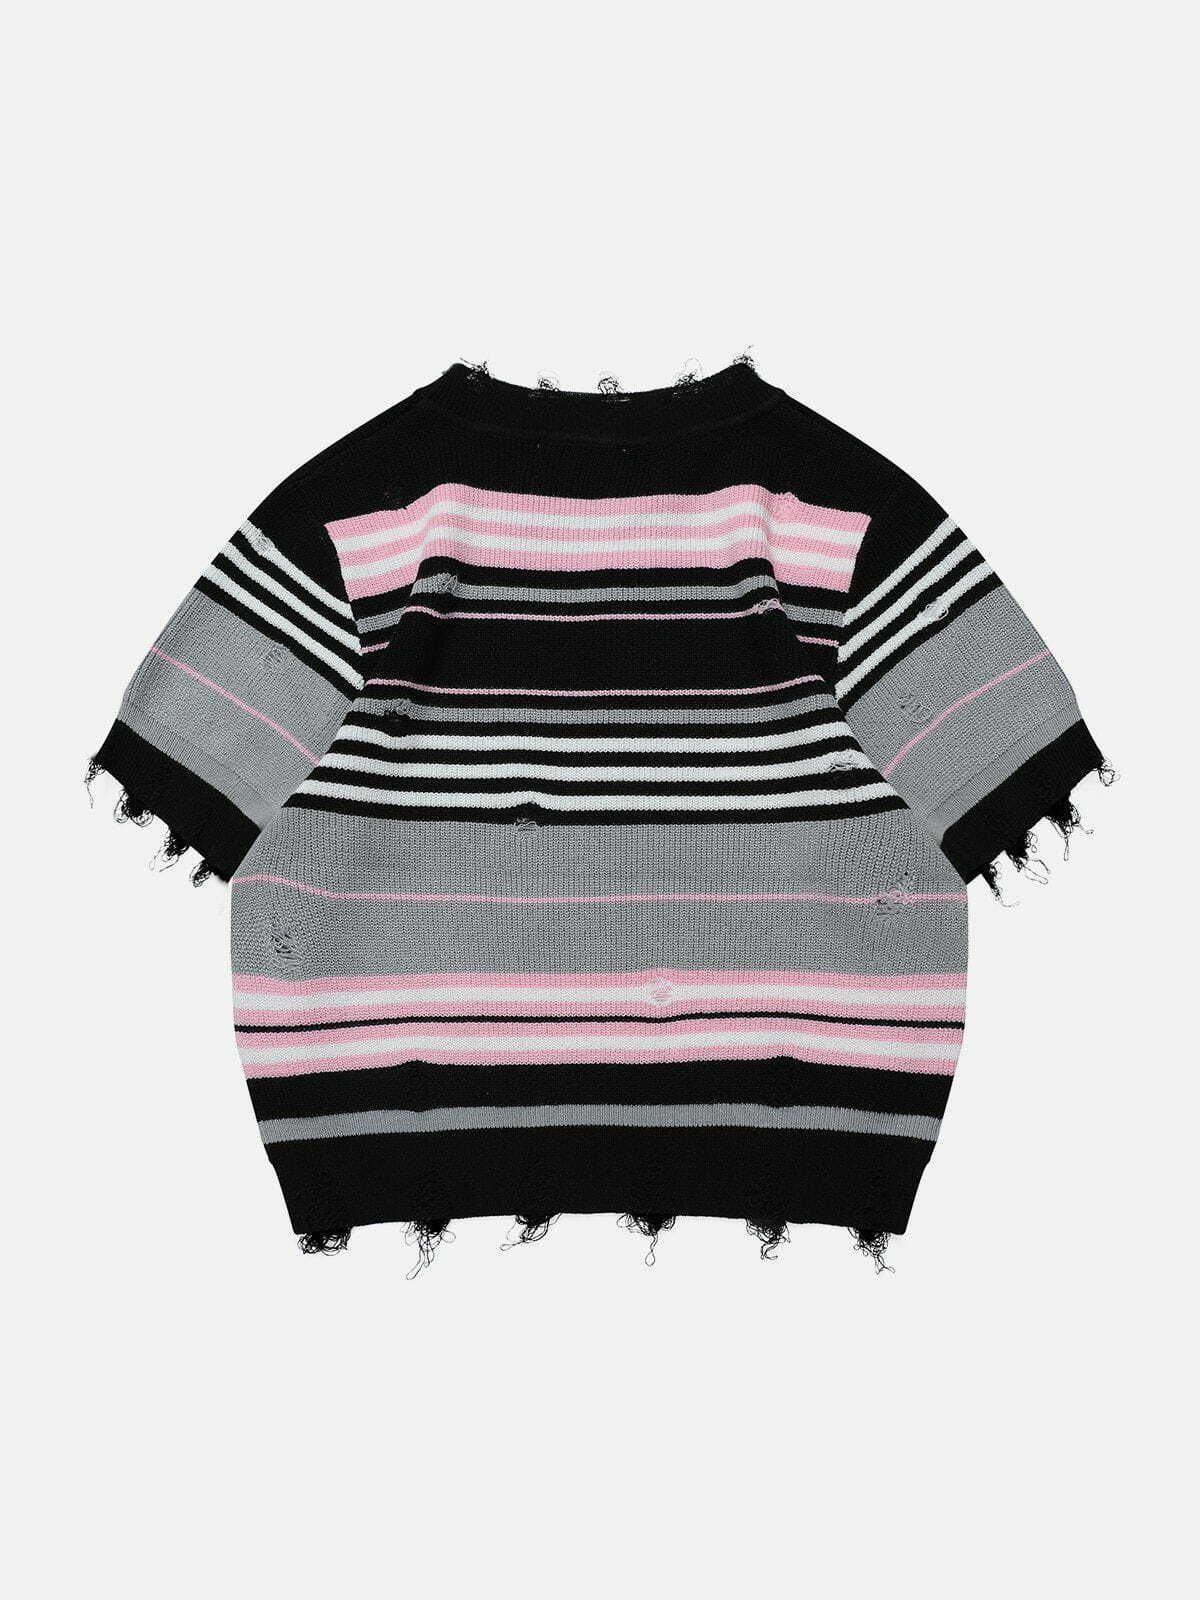 revolutionary striped knit tee edgy y2k streetwear 4263